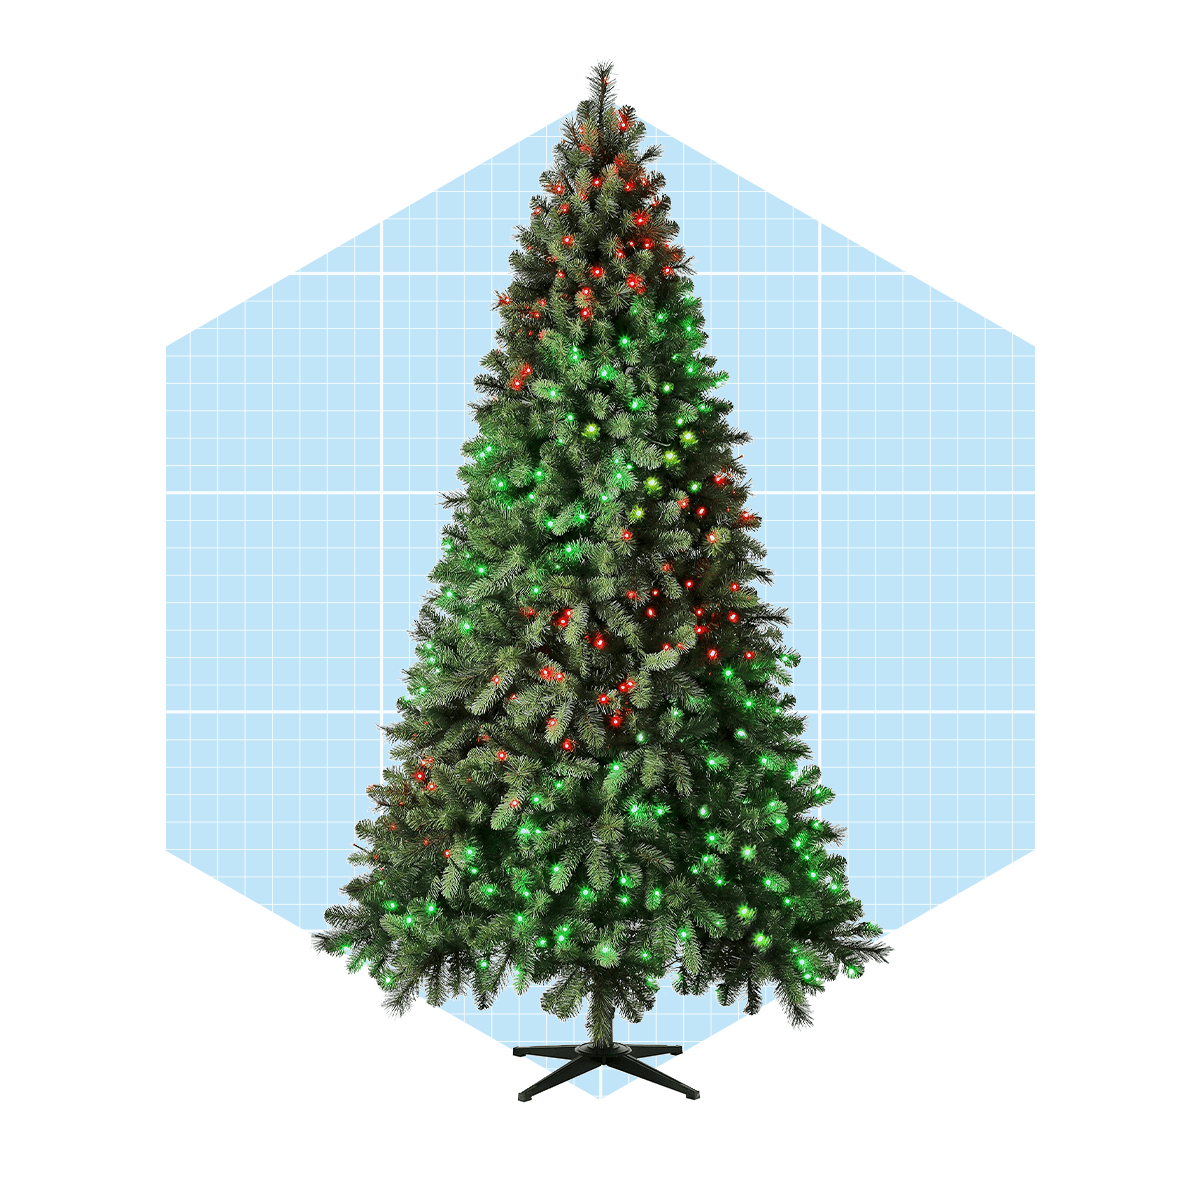 Evergreen Classics Prelit Twinkly Christmas Tree Ecomm Via Walmart.com